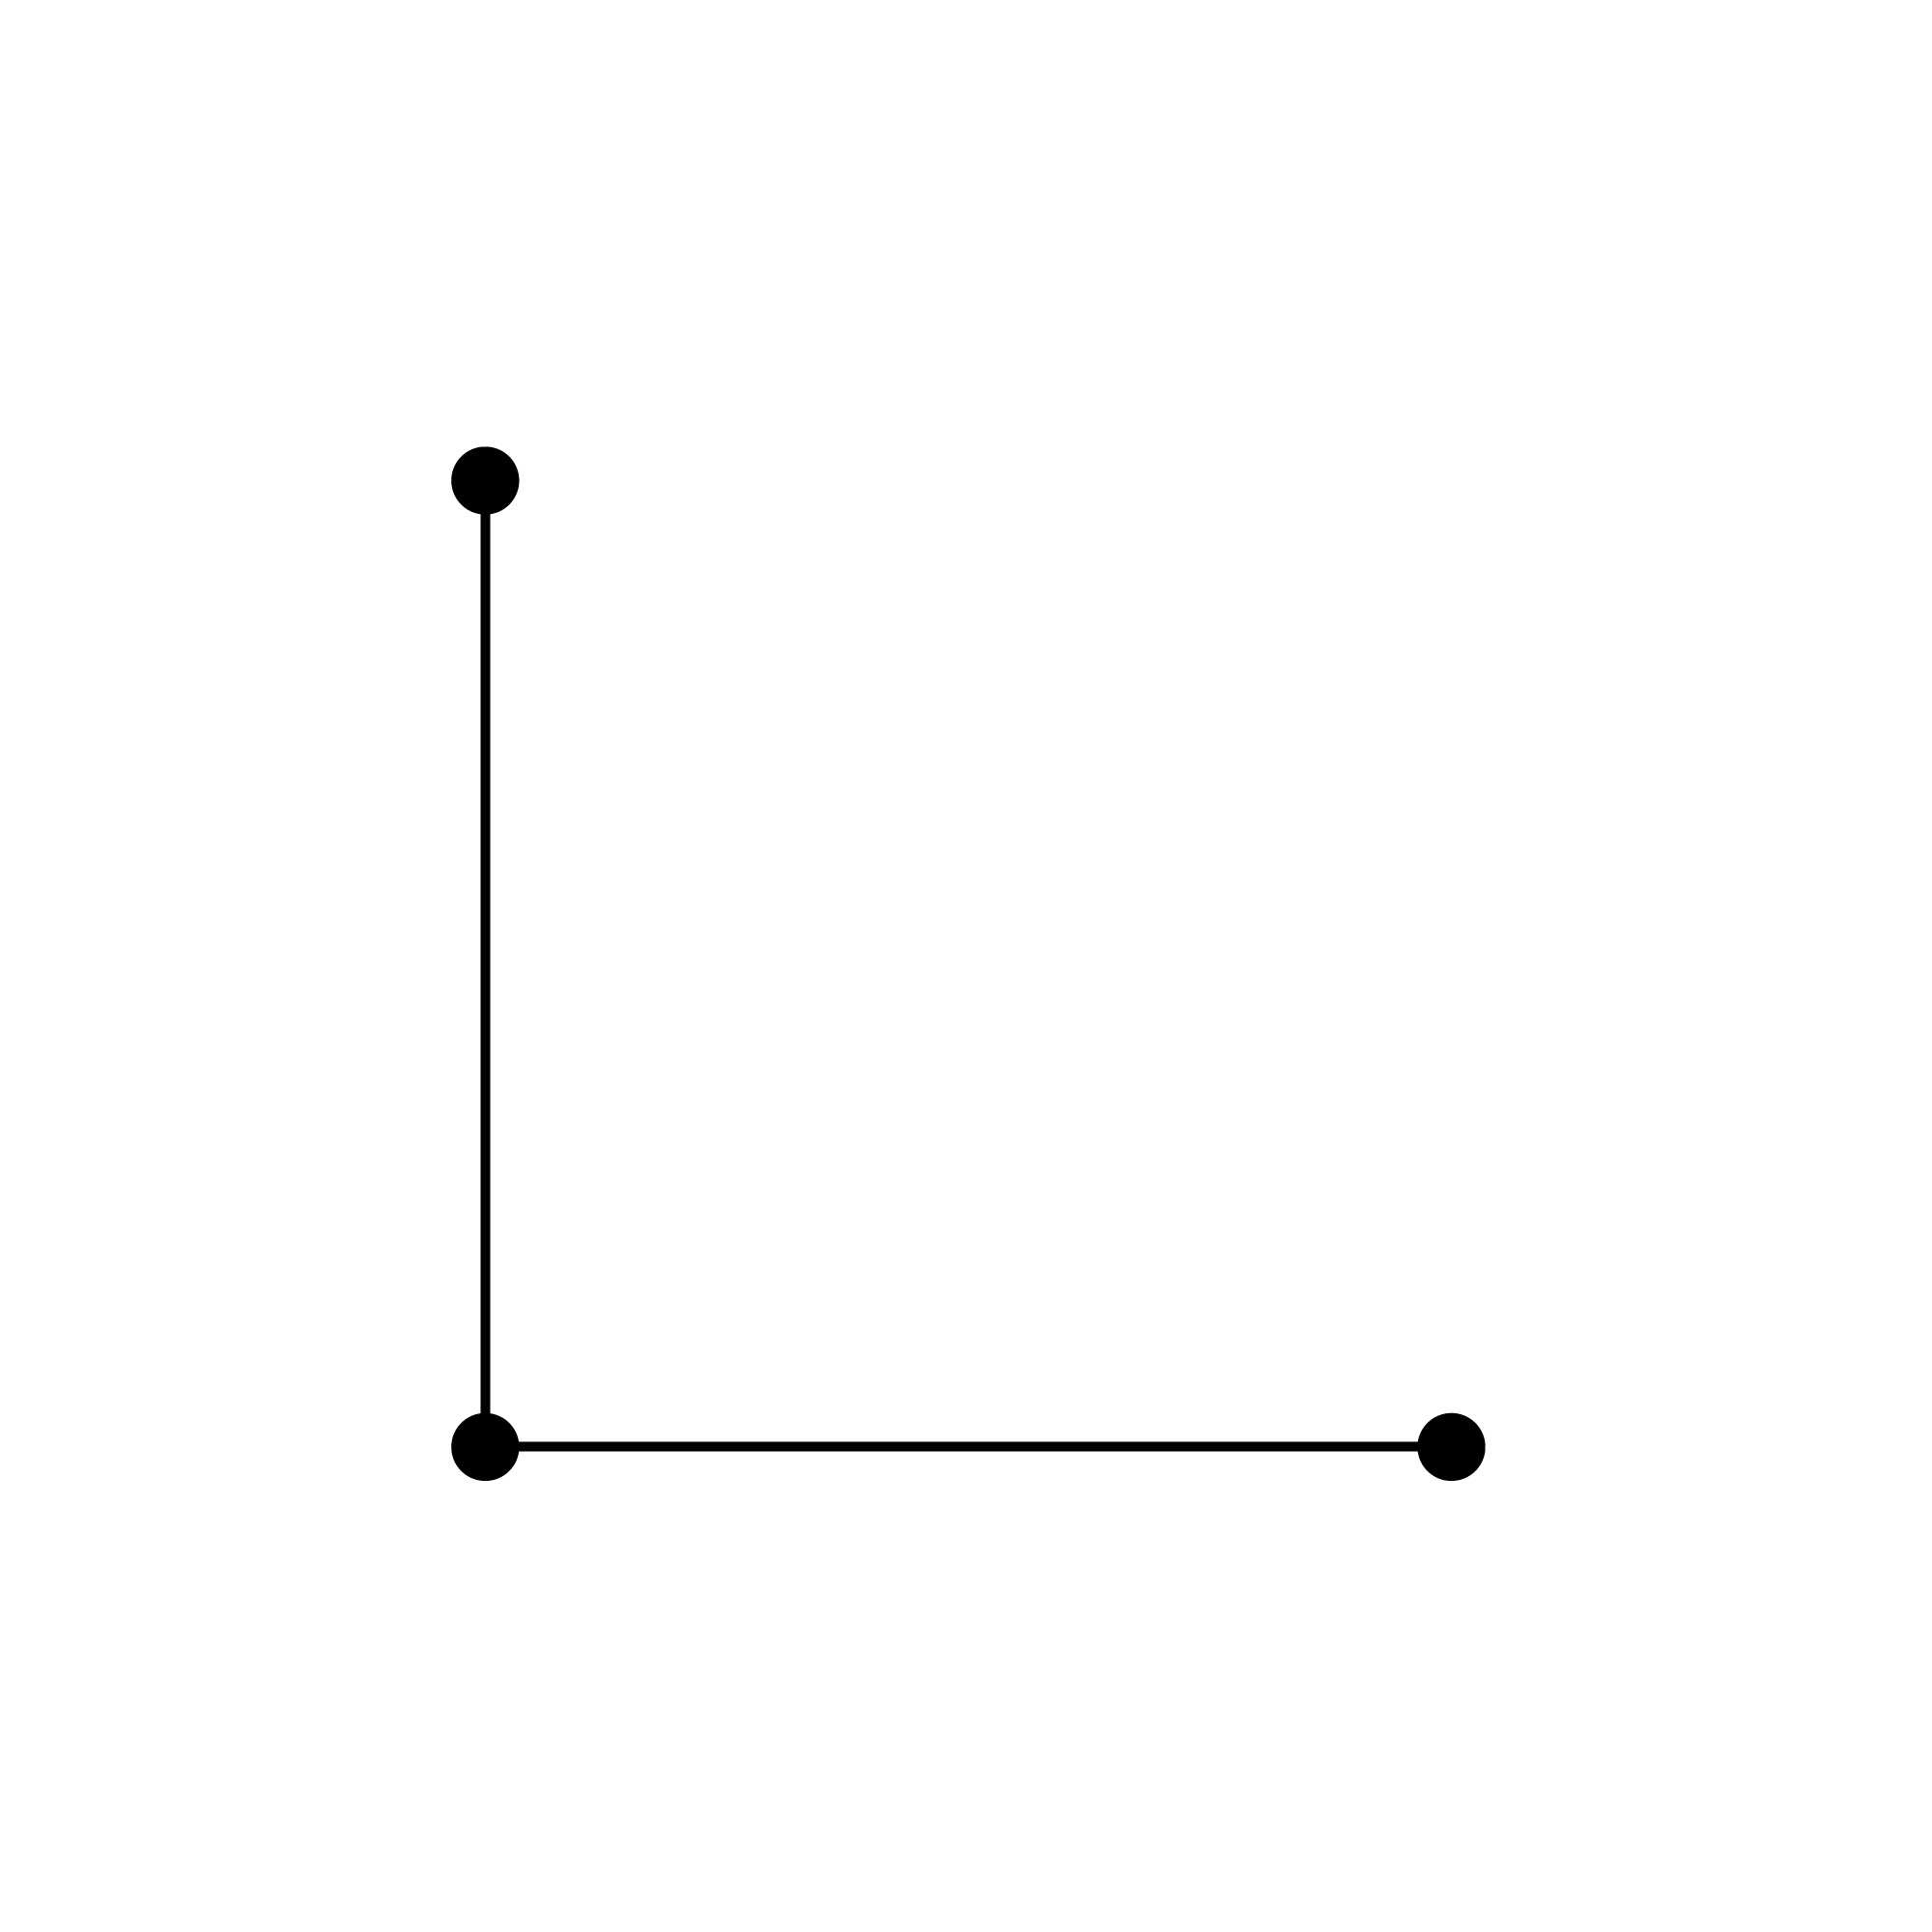 Perpendicular line segments